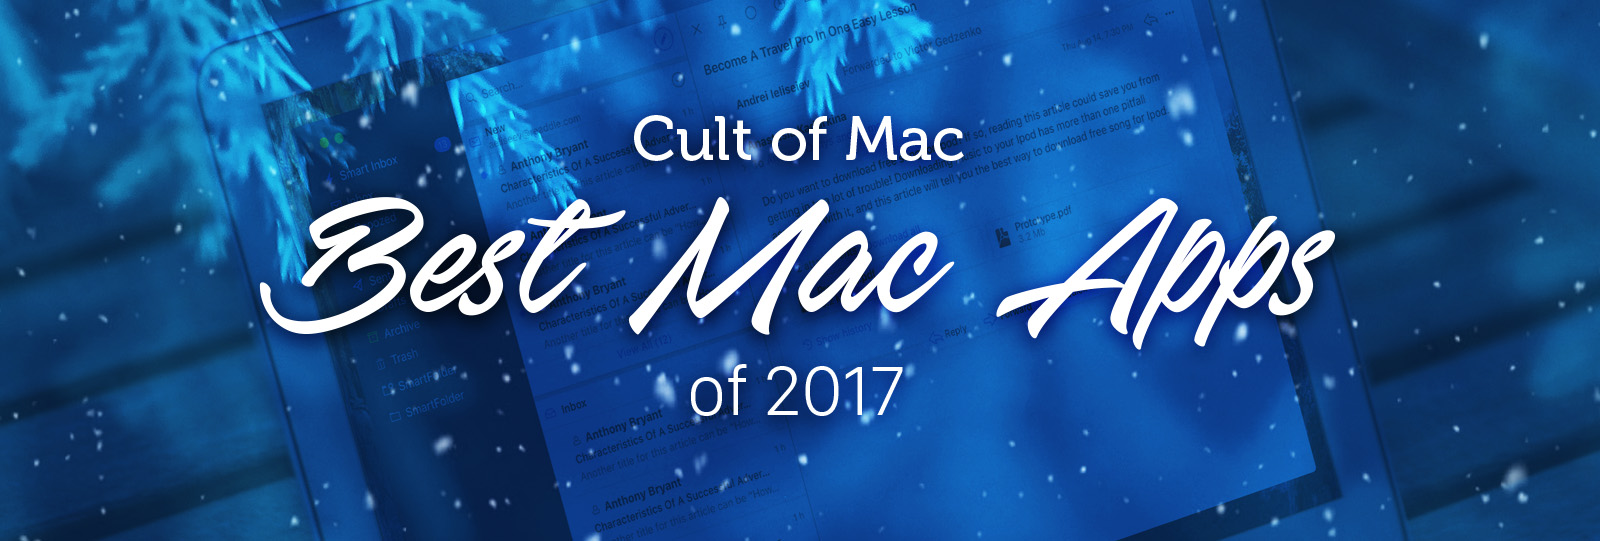 best productivity app for mac 2017